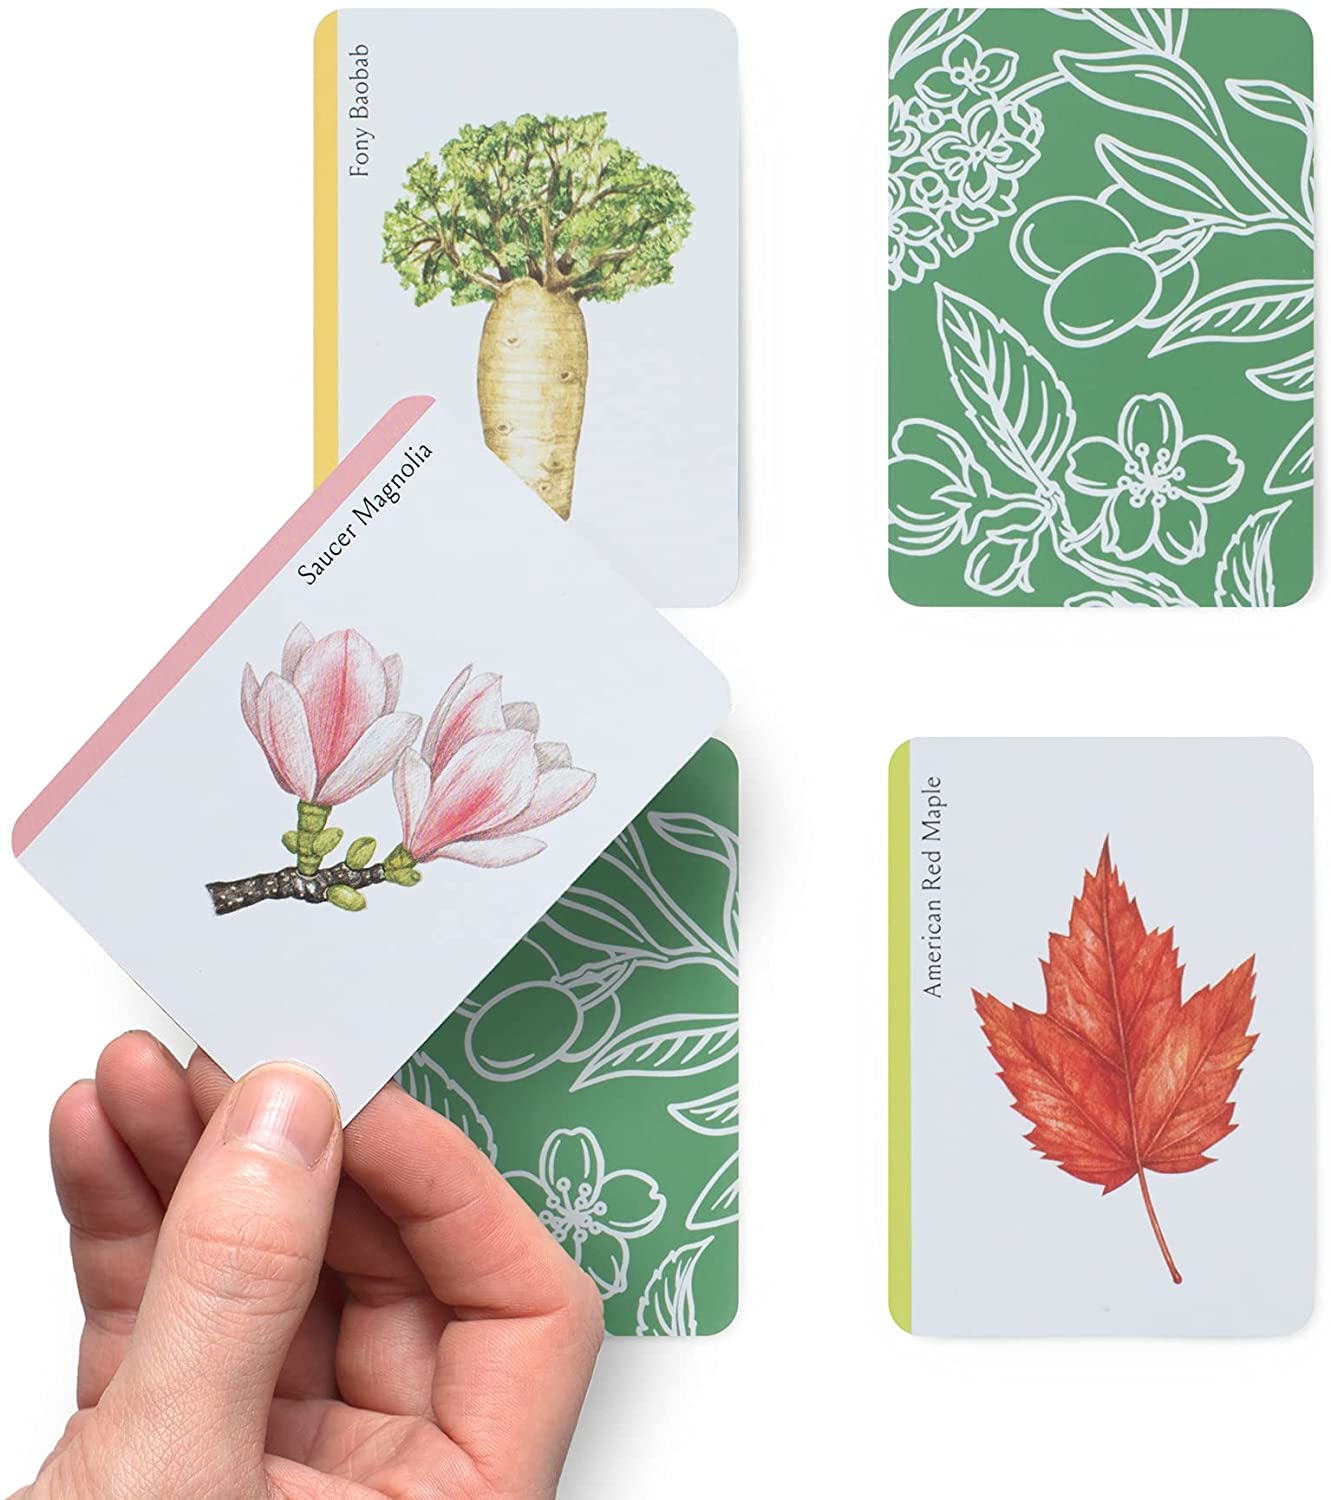 Tree Families: A Botanical Card Game